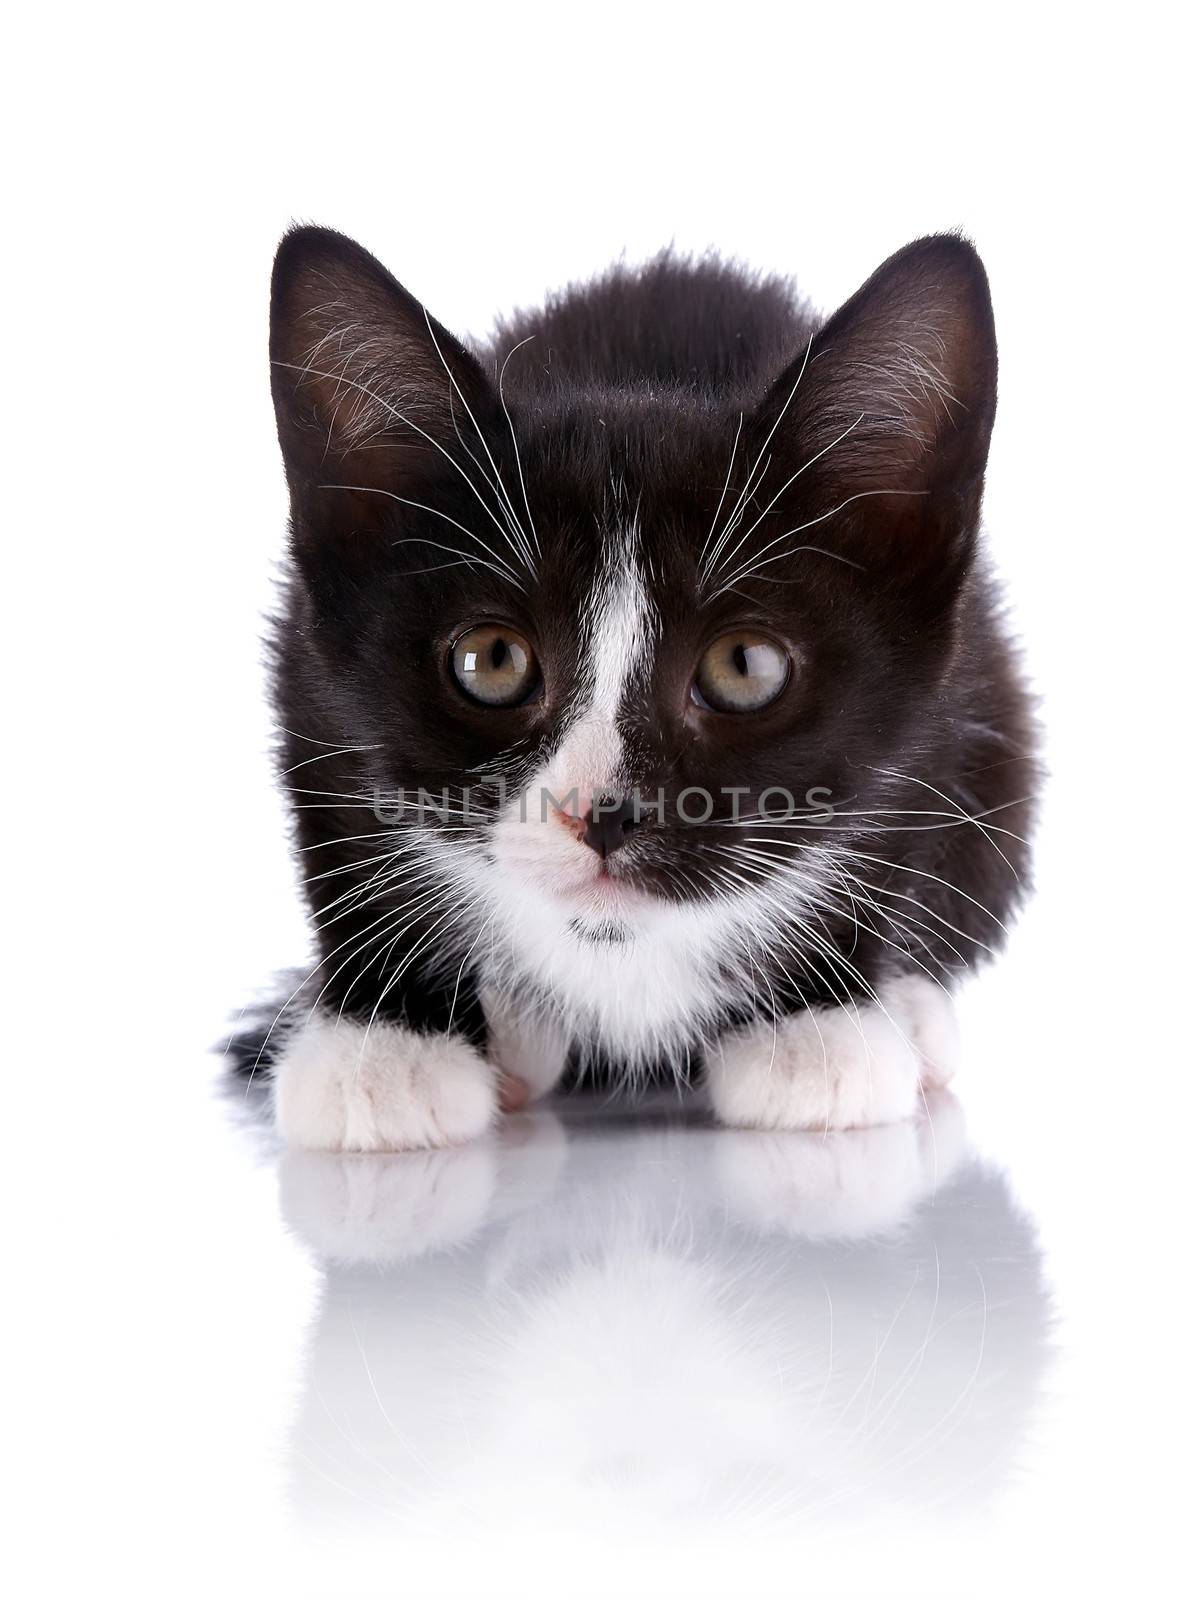 Black and white small frightened kitten. by Azaliya